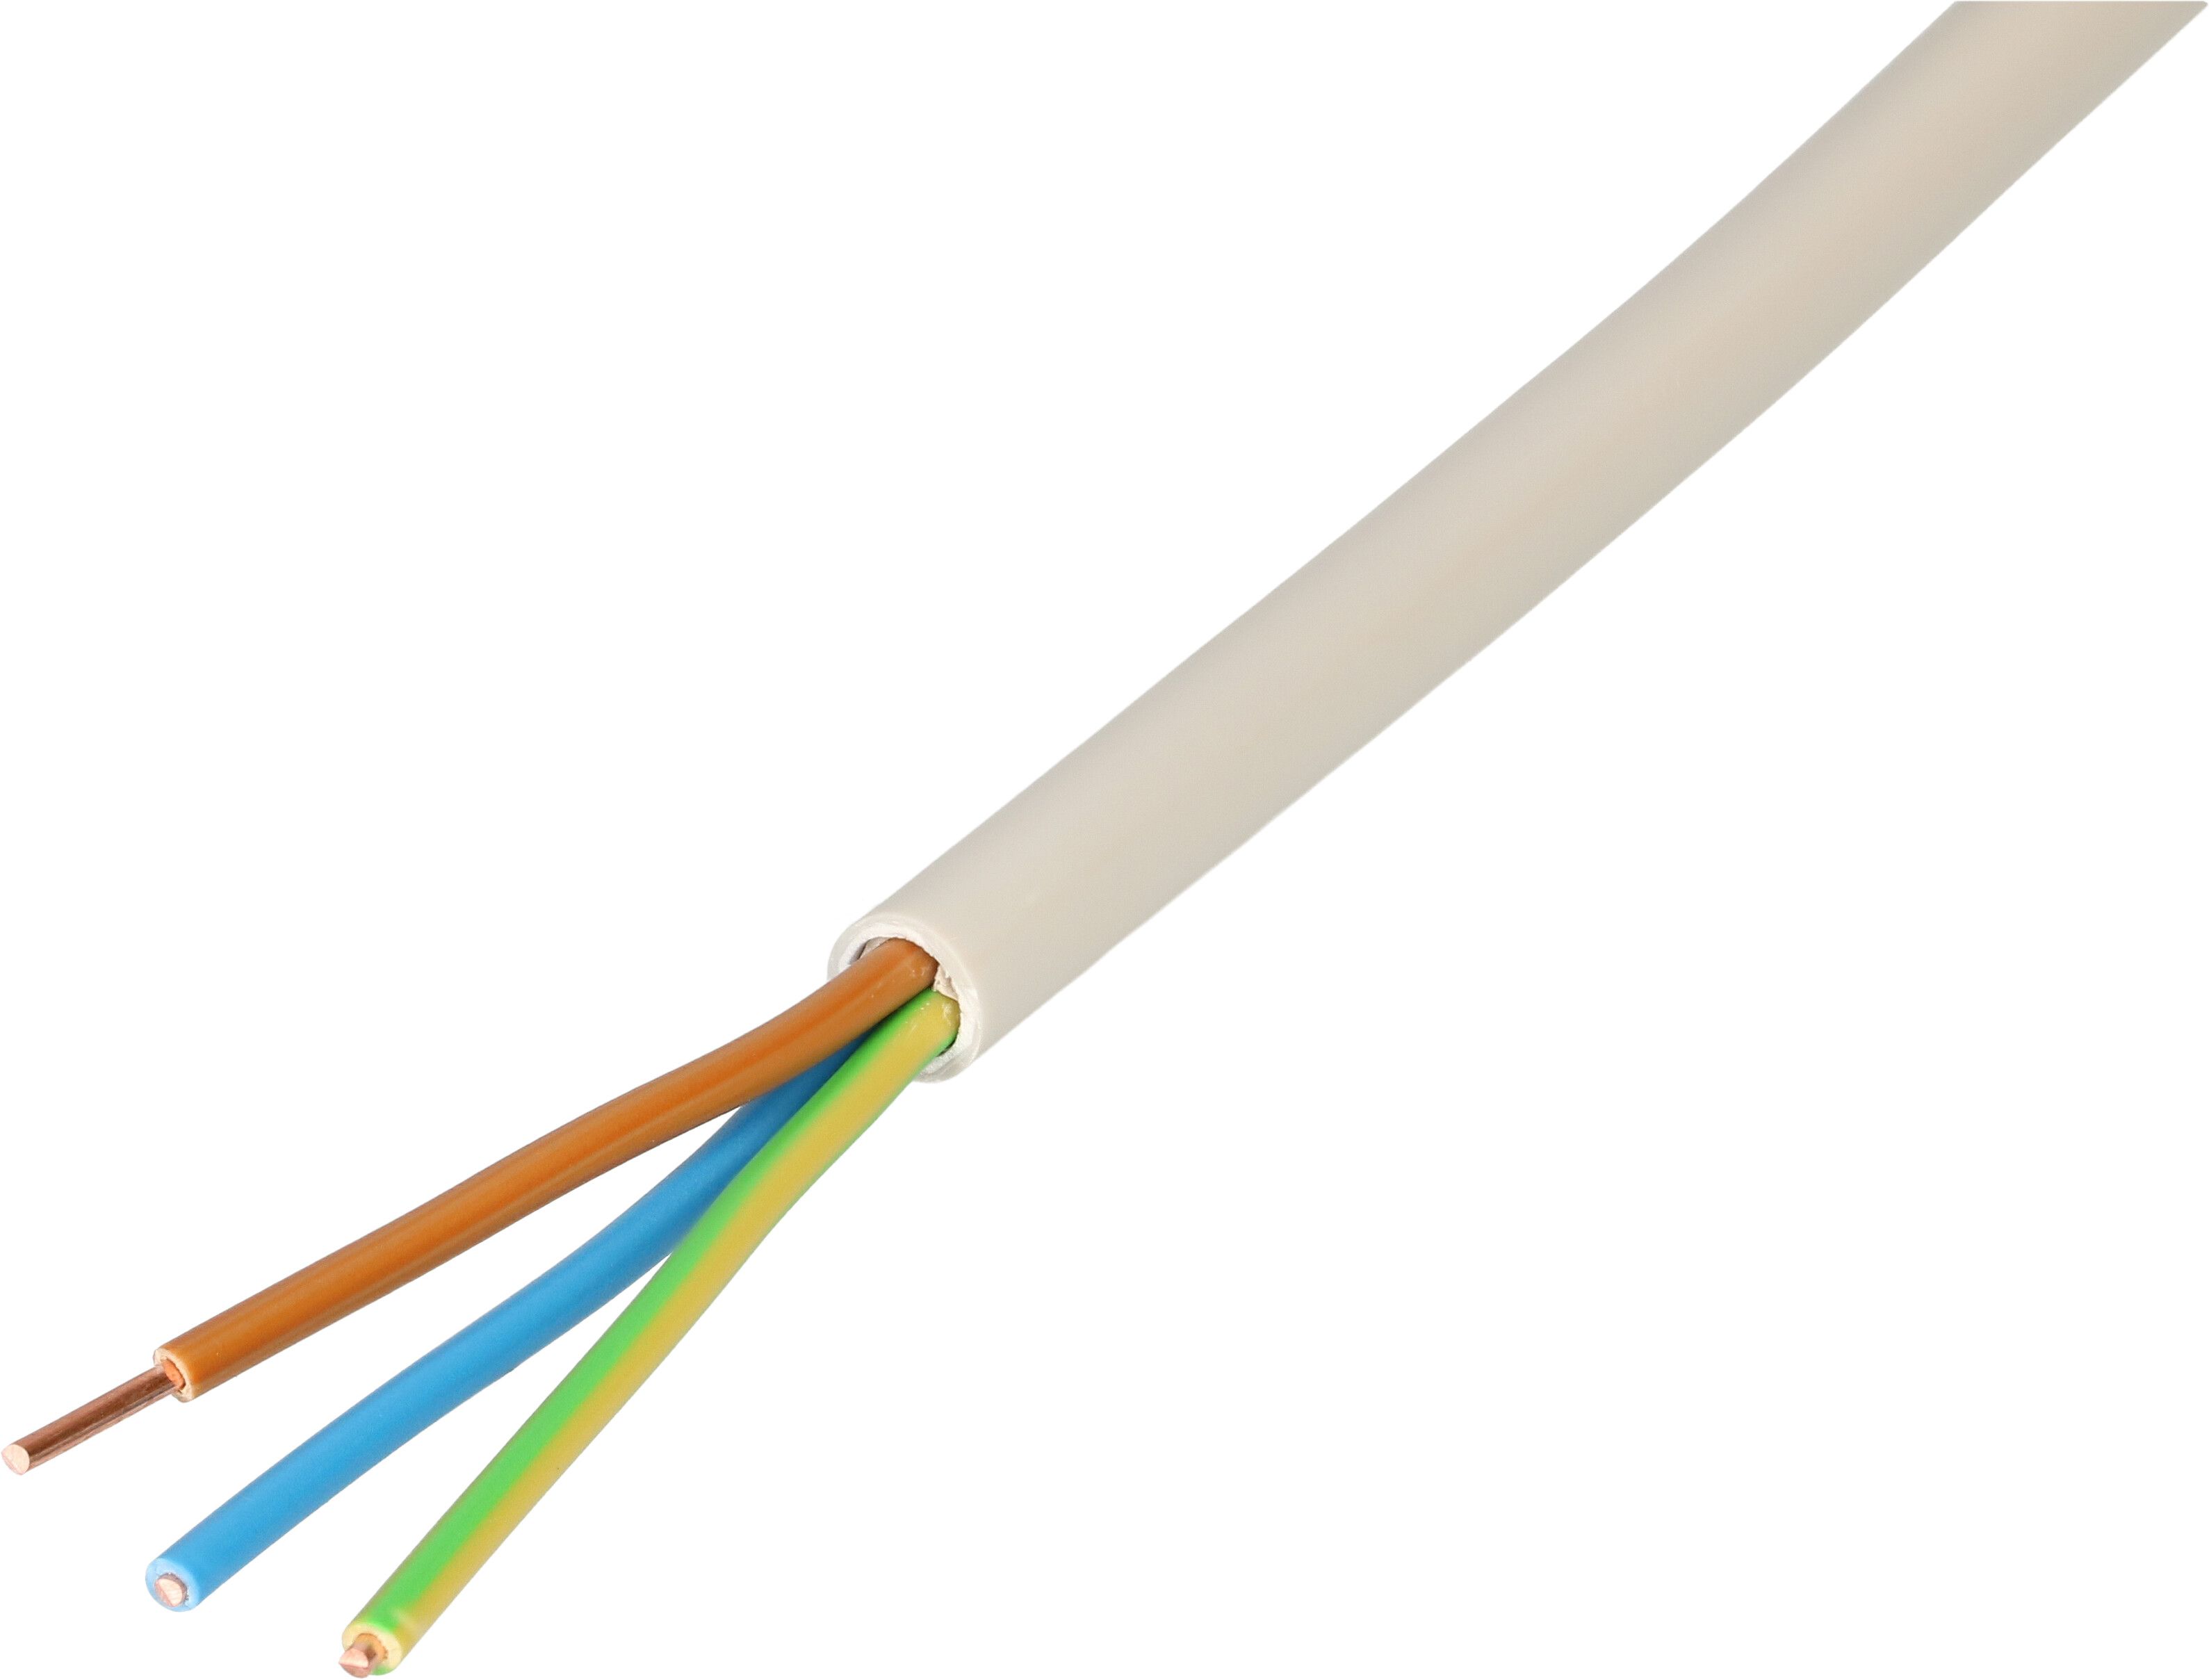 TT-Kabel CH-N1VV-U3G1.5 5.0m grau